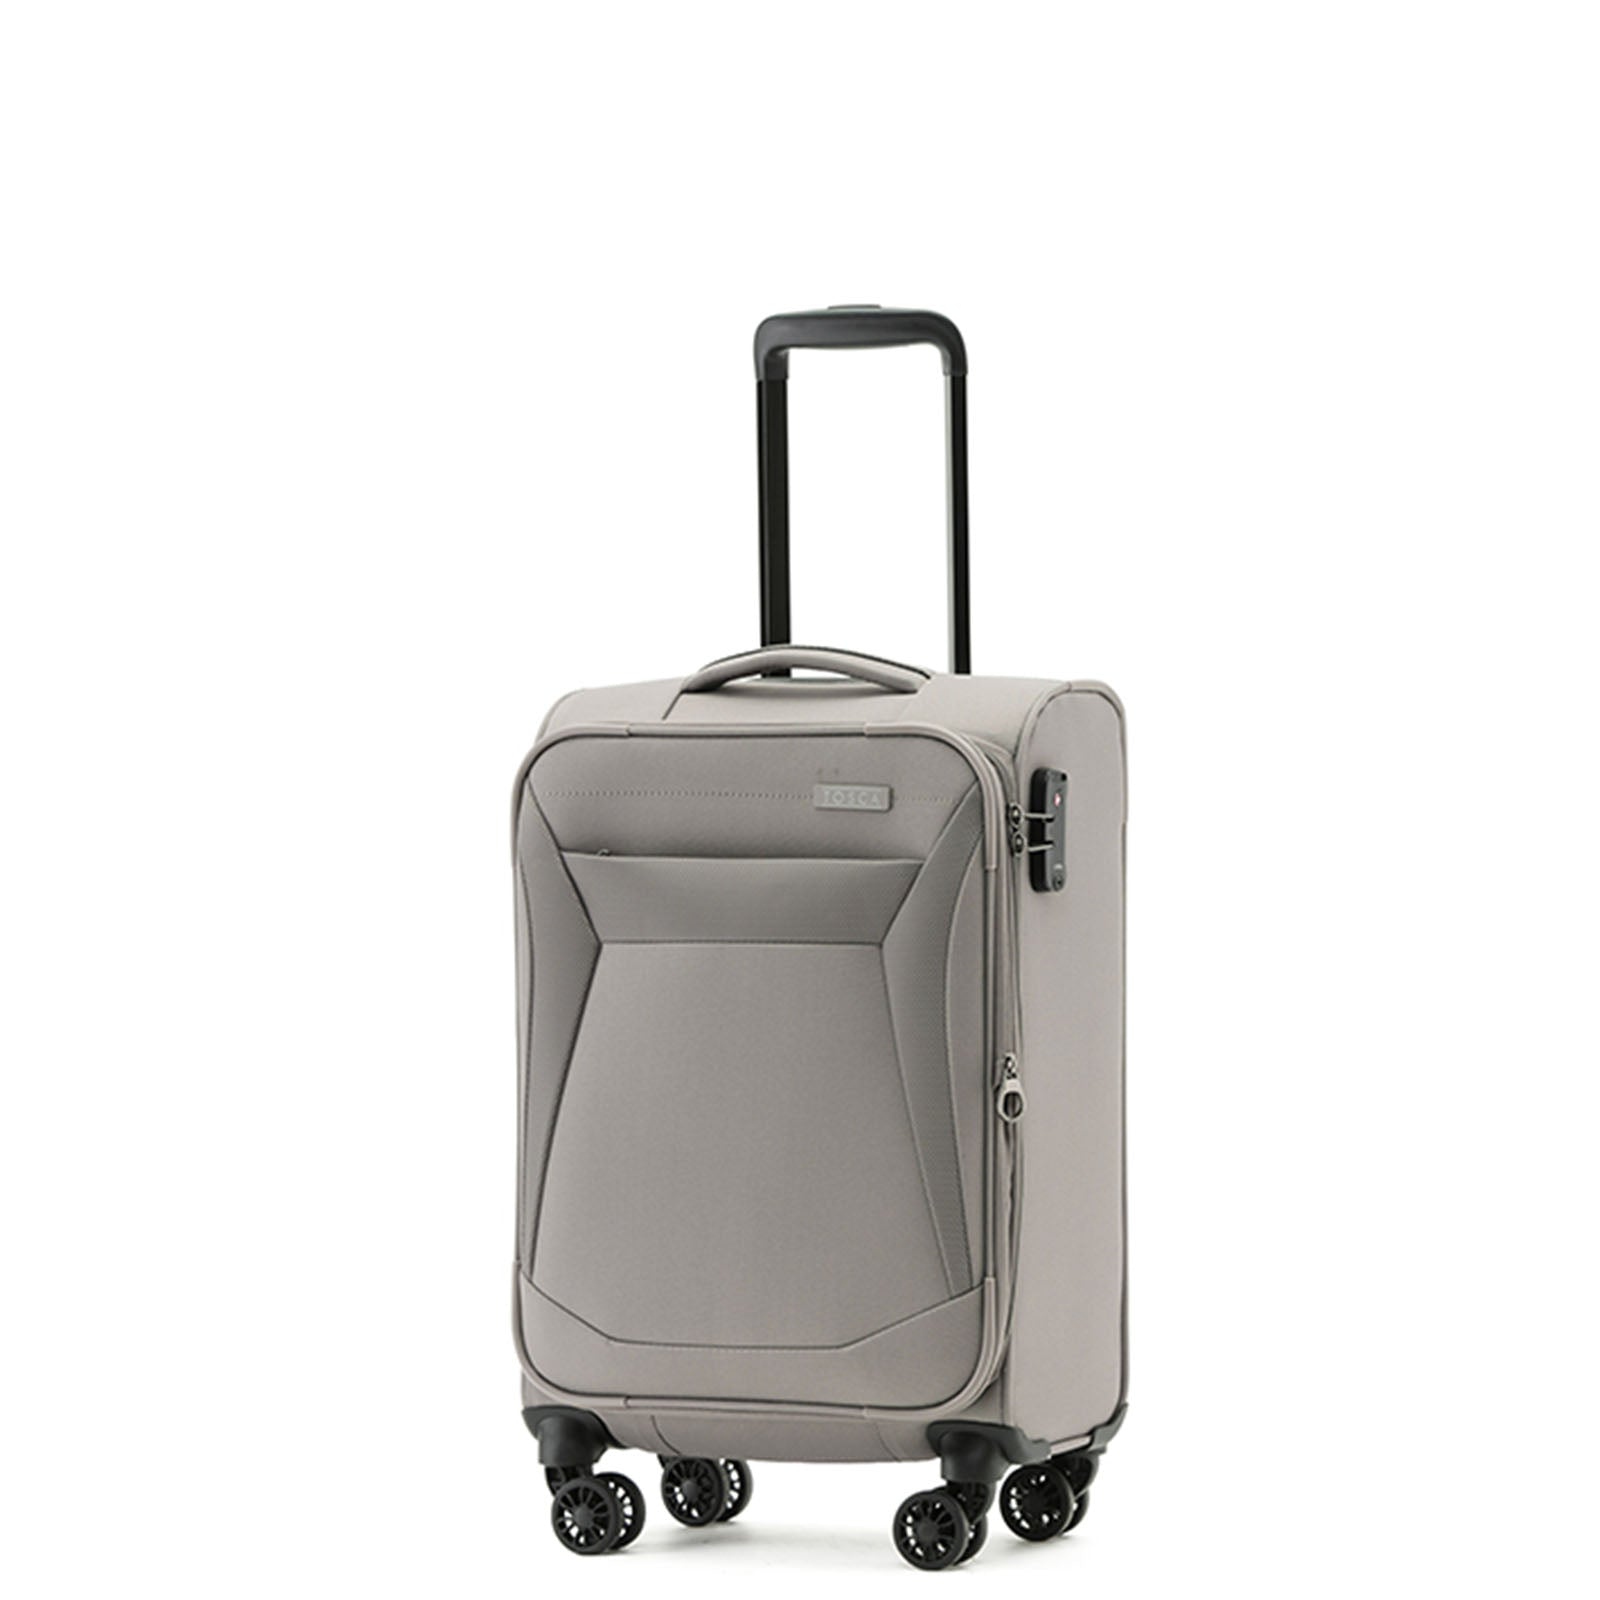 Tosca-Aviator-4-Wheel-Carry-On-Suitcase-Khaki-Front-Angle